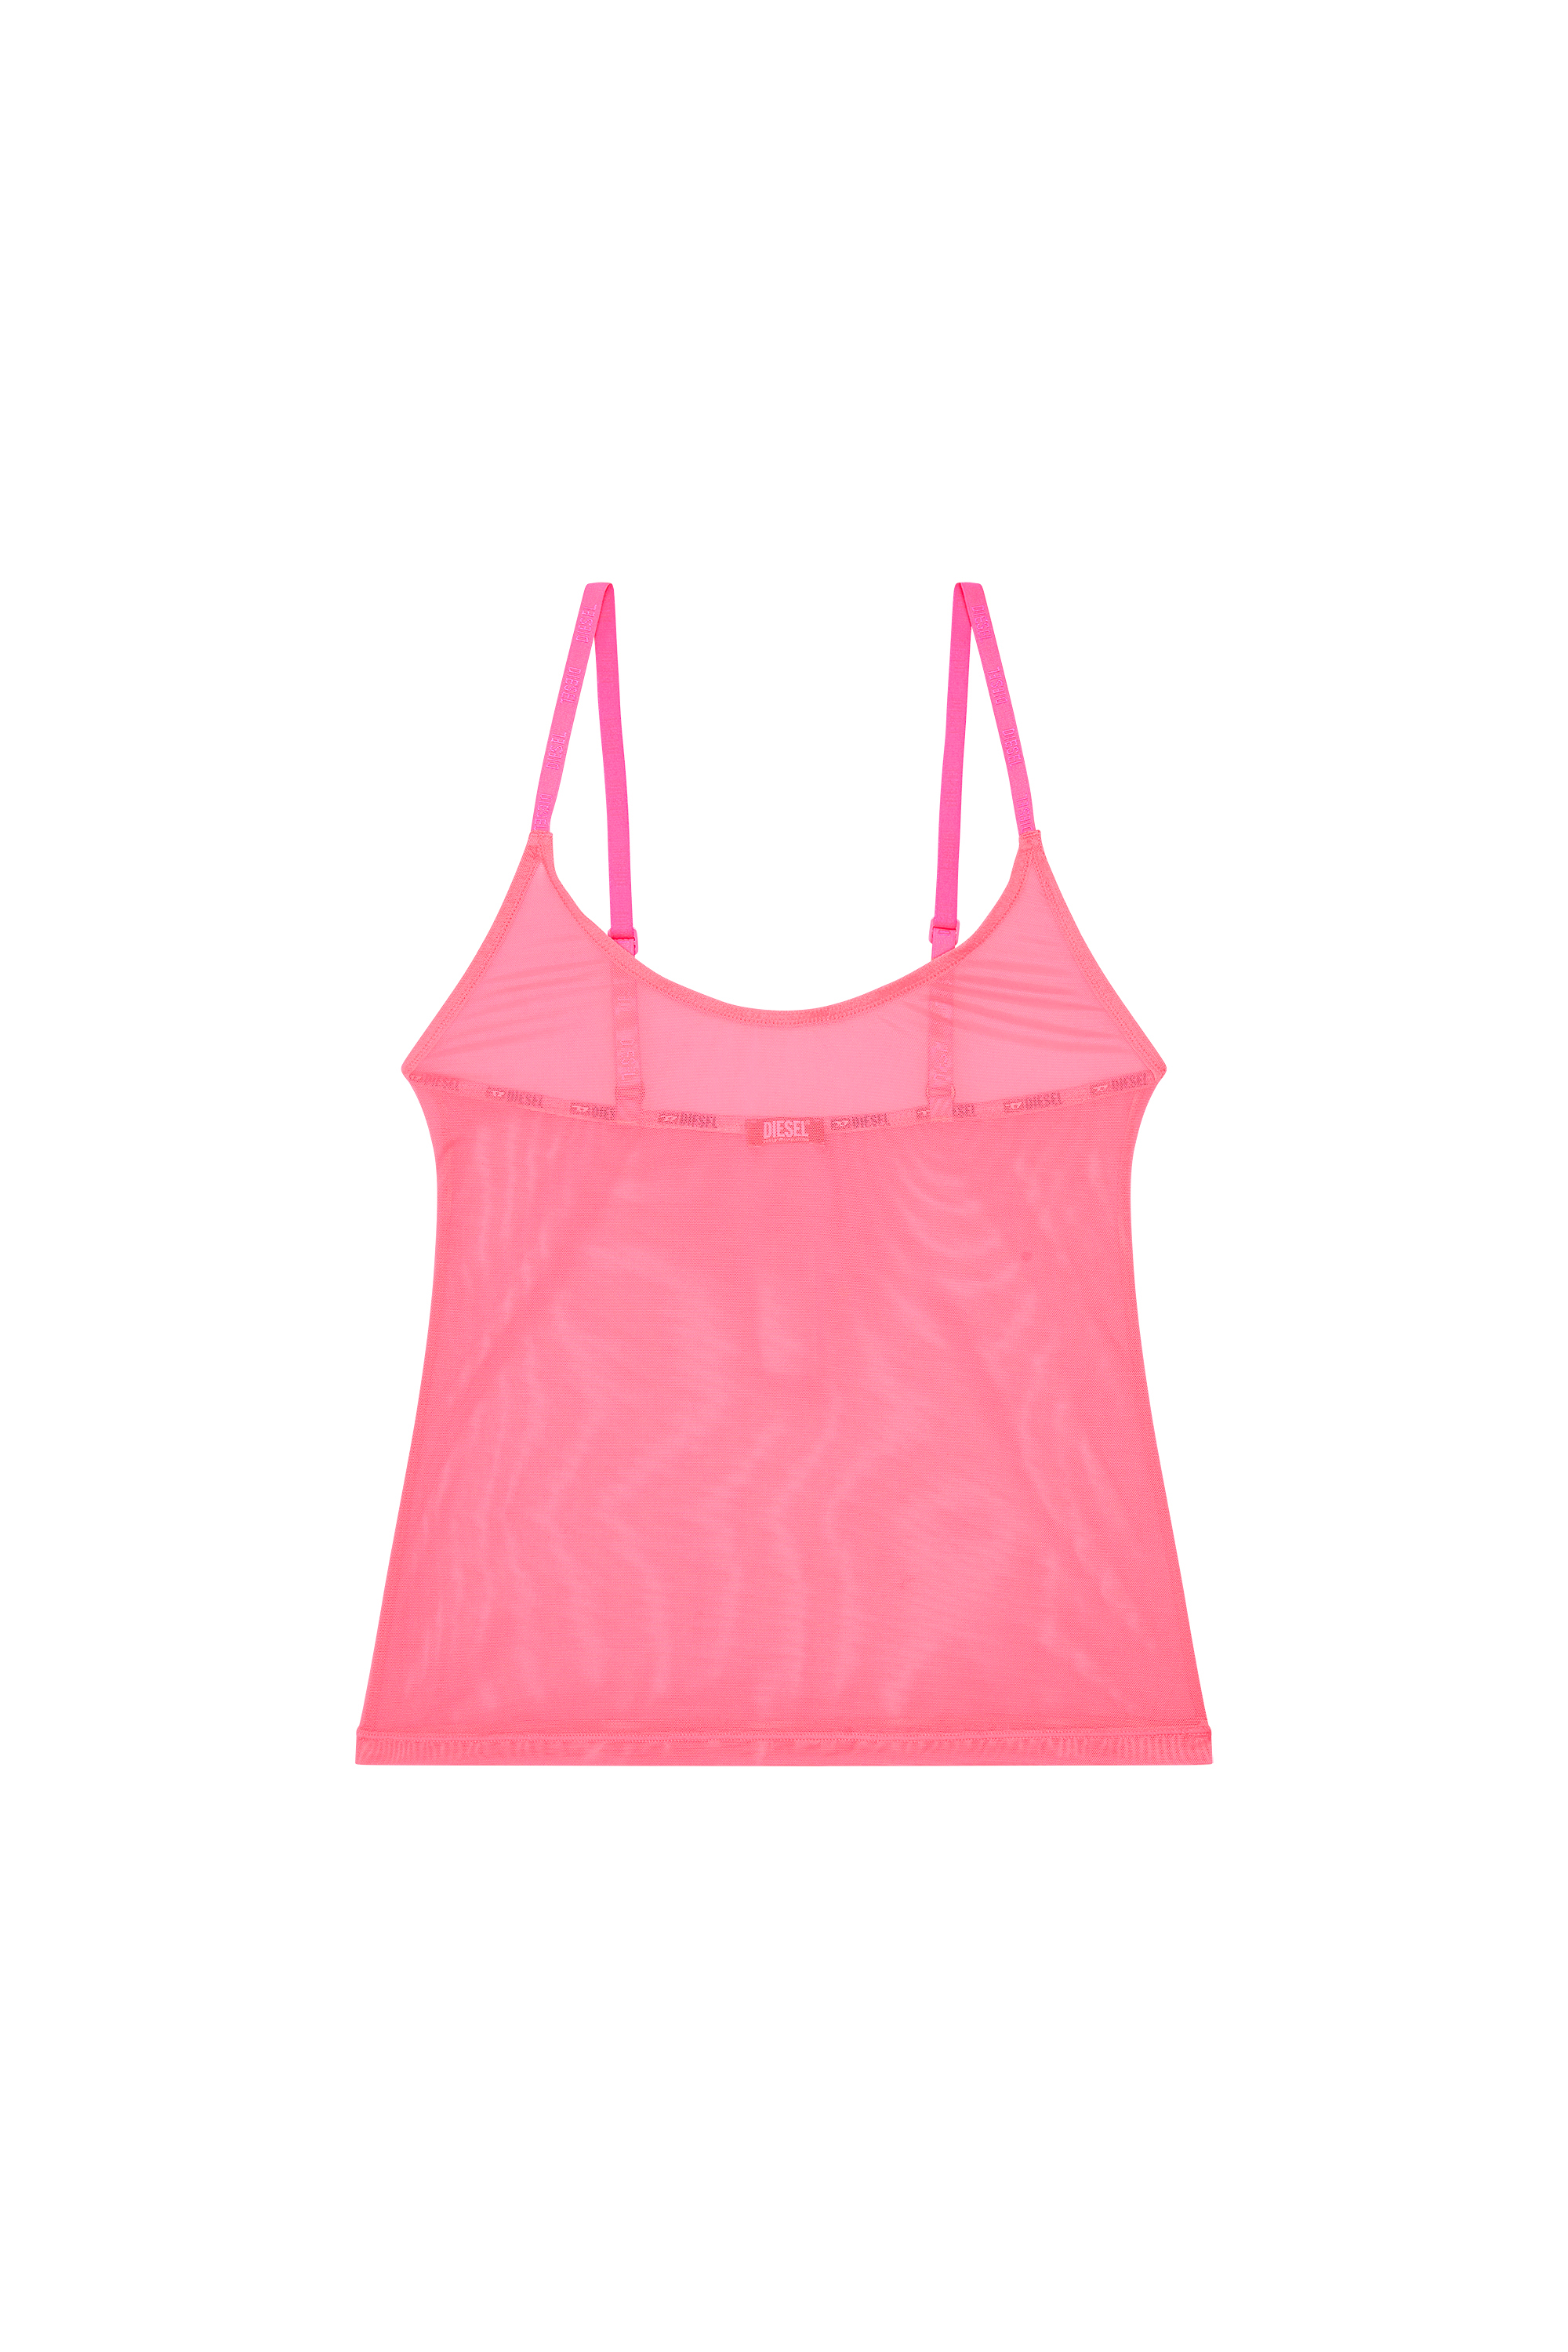 Diesel - UFTK-KIRSTEN, Woman Camisole in stretchy mesh in Pink - Image 5